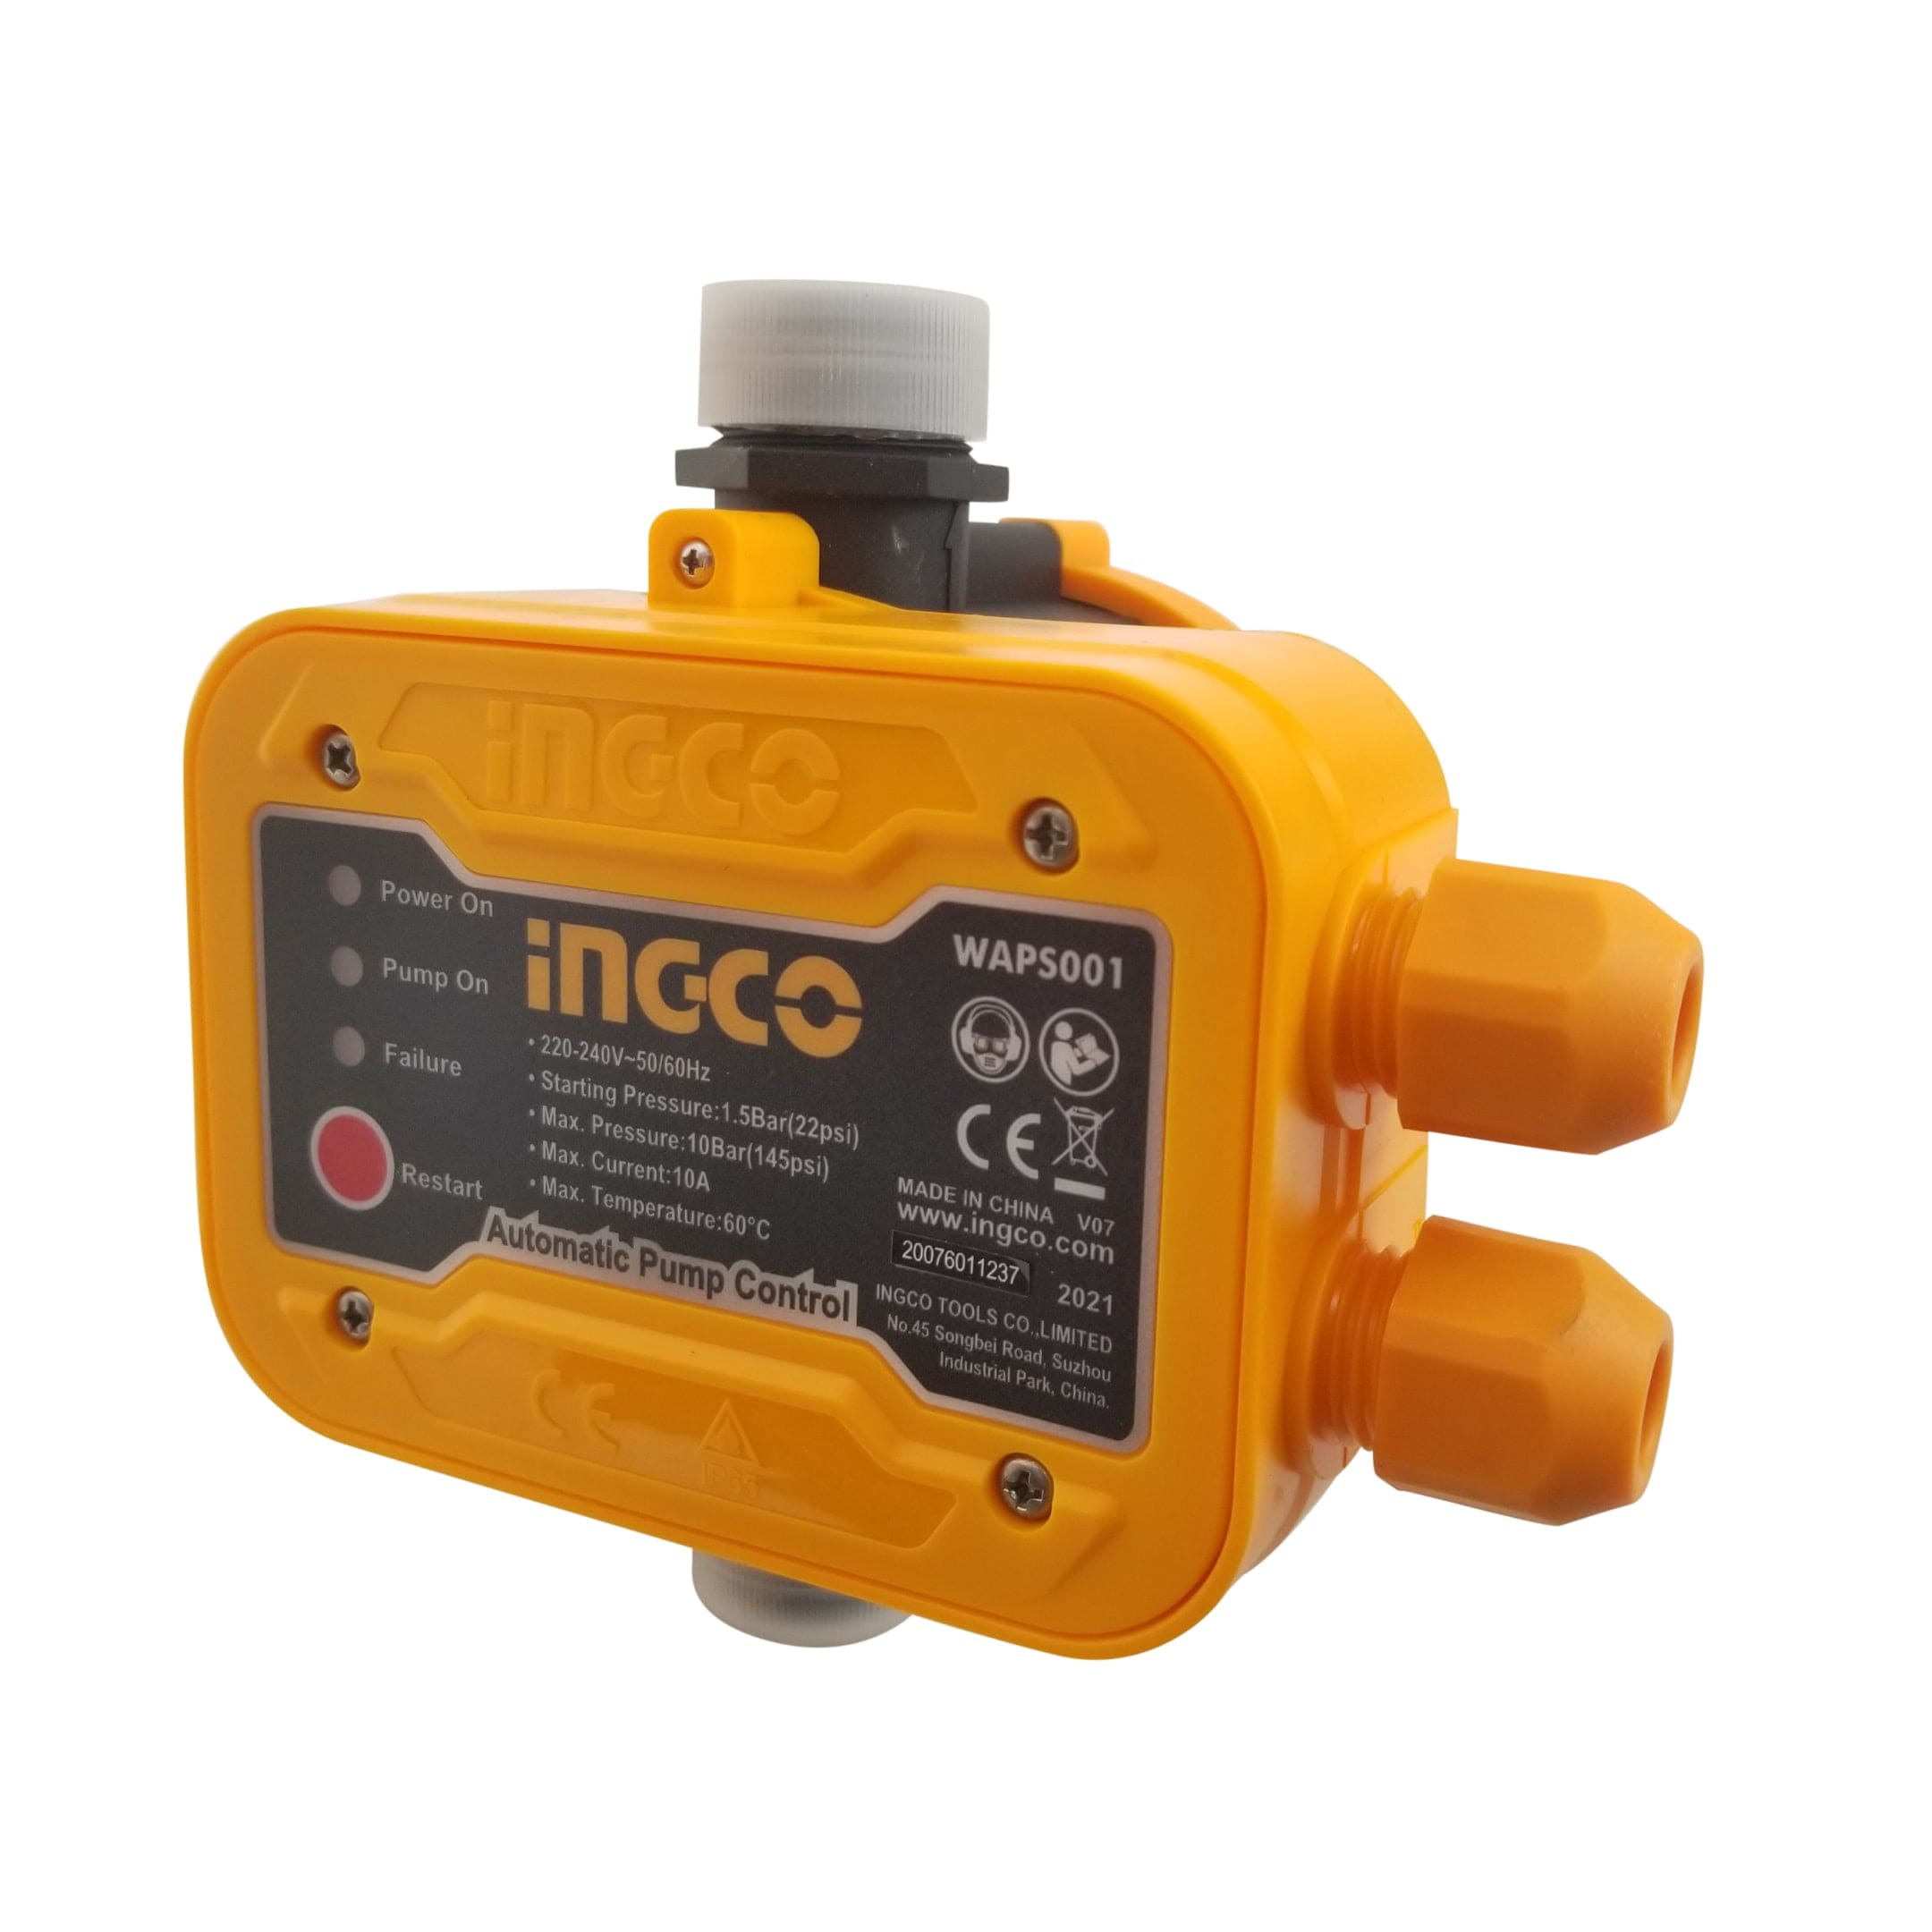 Ingco Automatic Pump Control - WAPS001 | Supply Master | Accra, Ghana Pump Control Buy Tools hardware Building materials